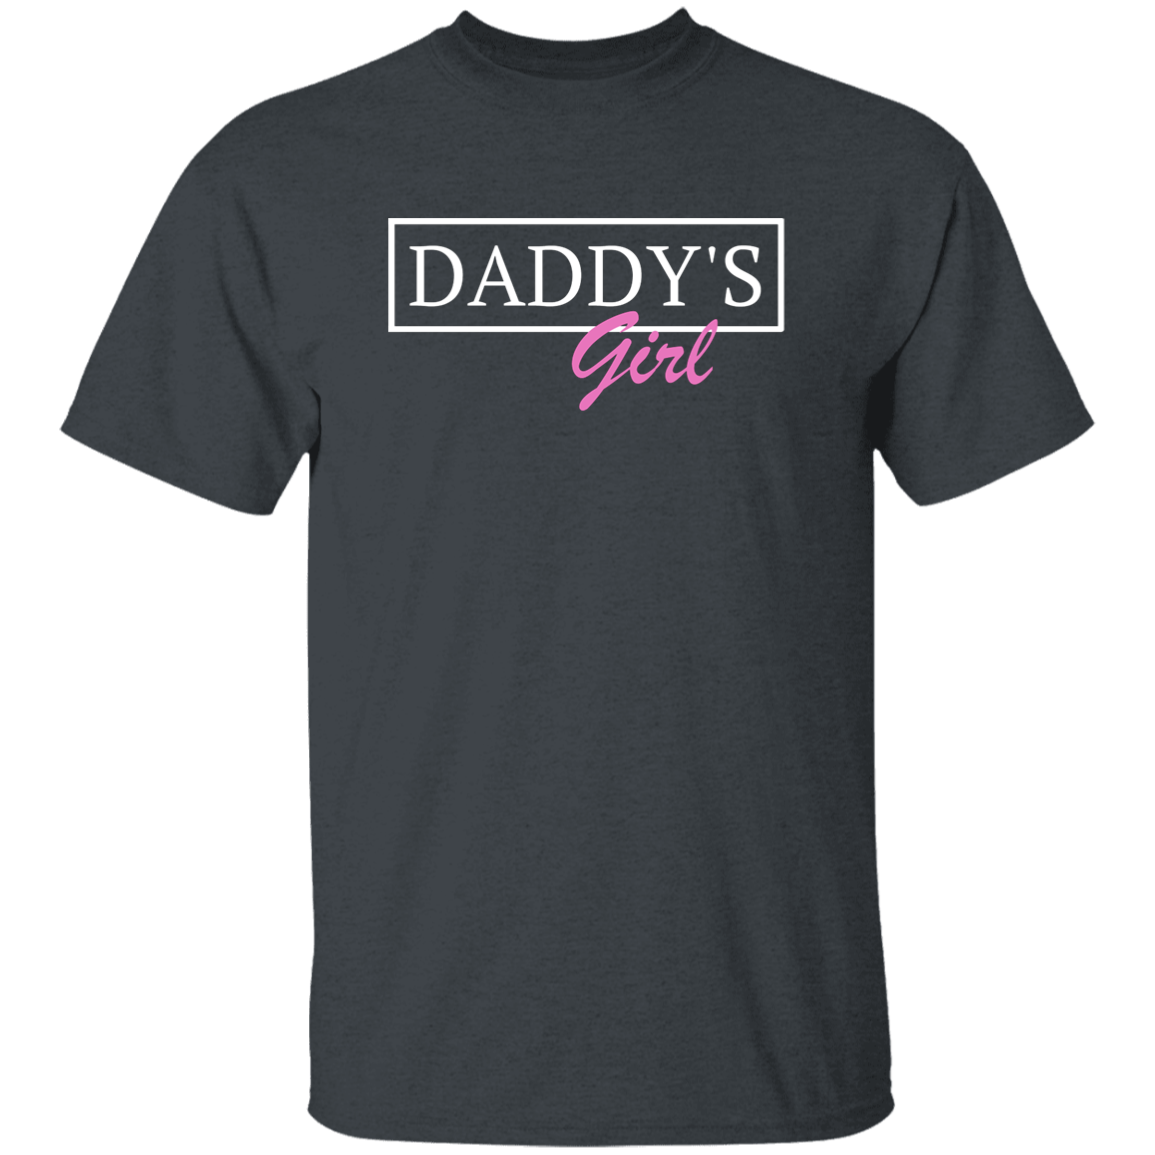 Youth - "Daddys Girl" Matching Shirt